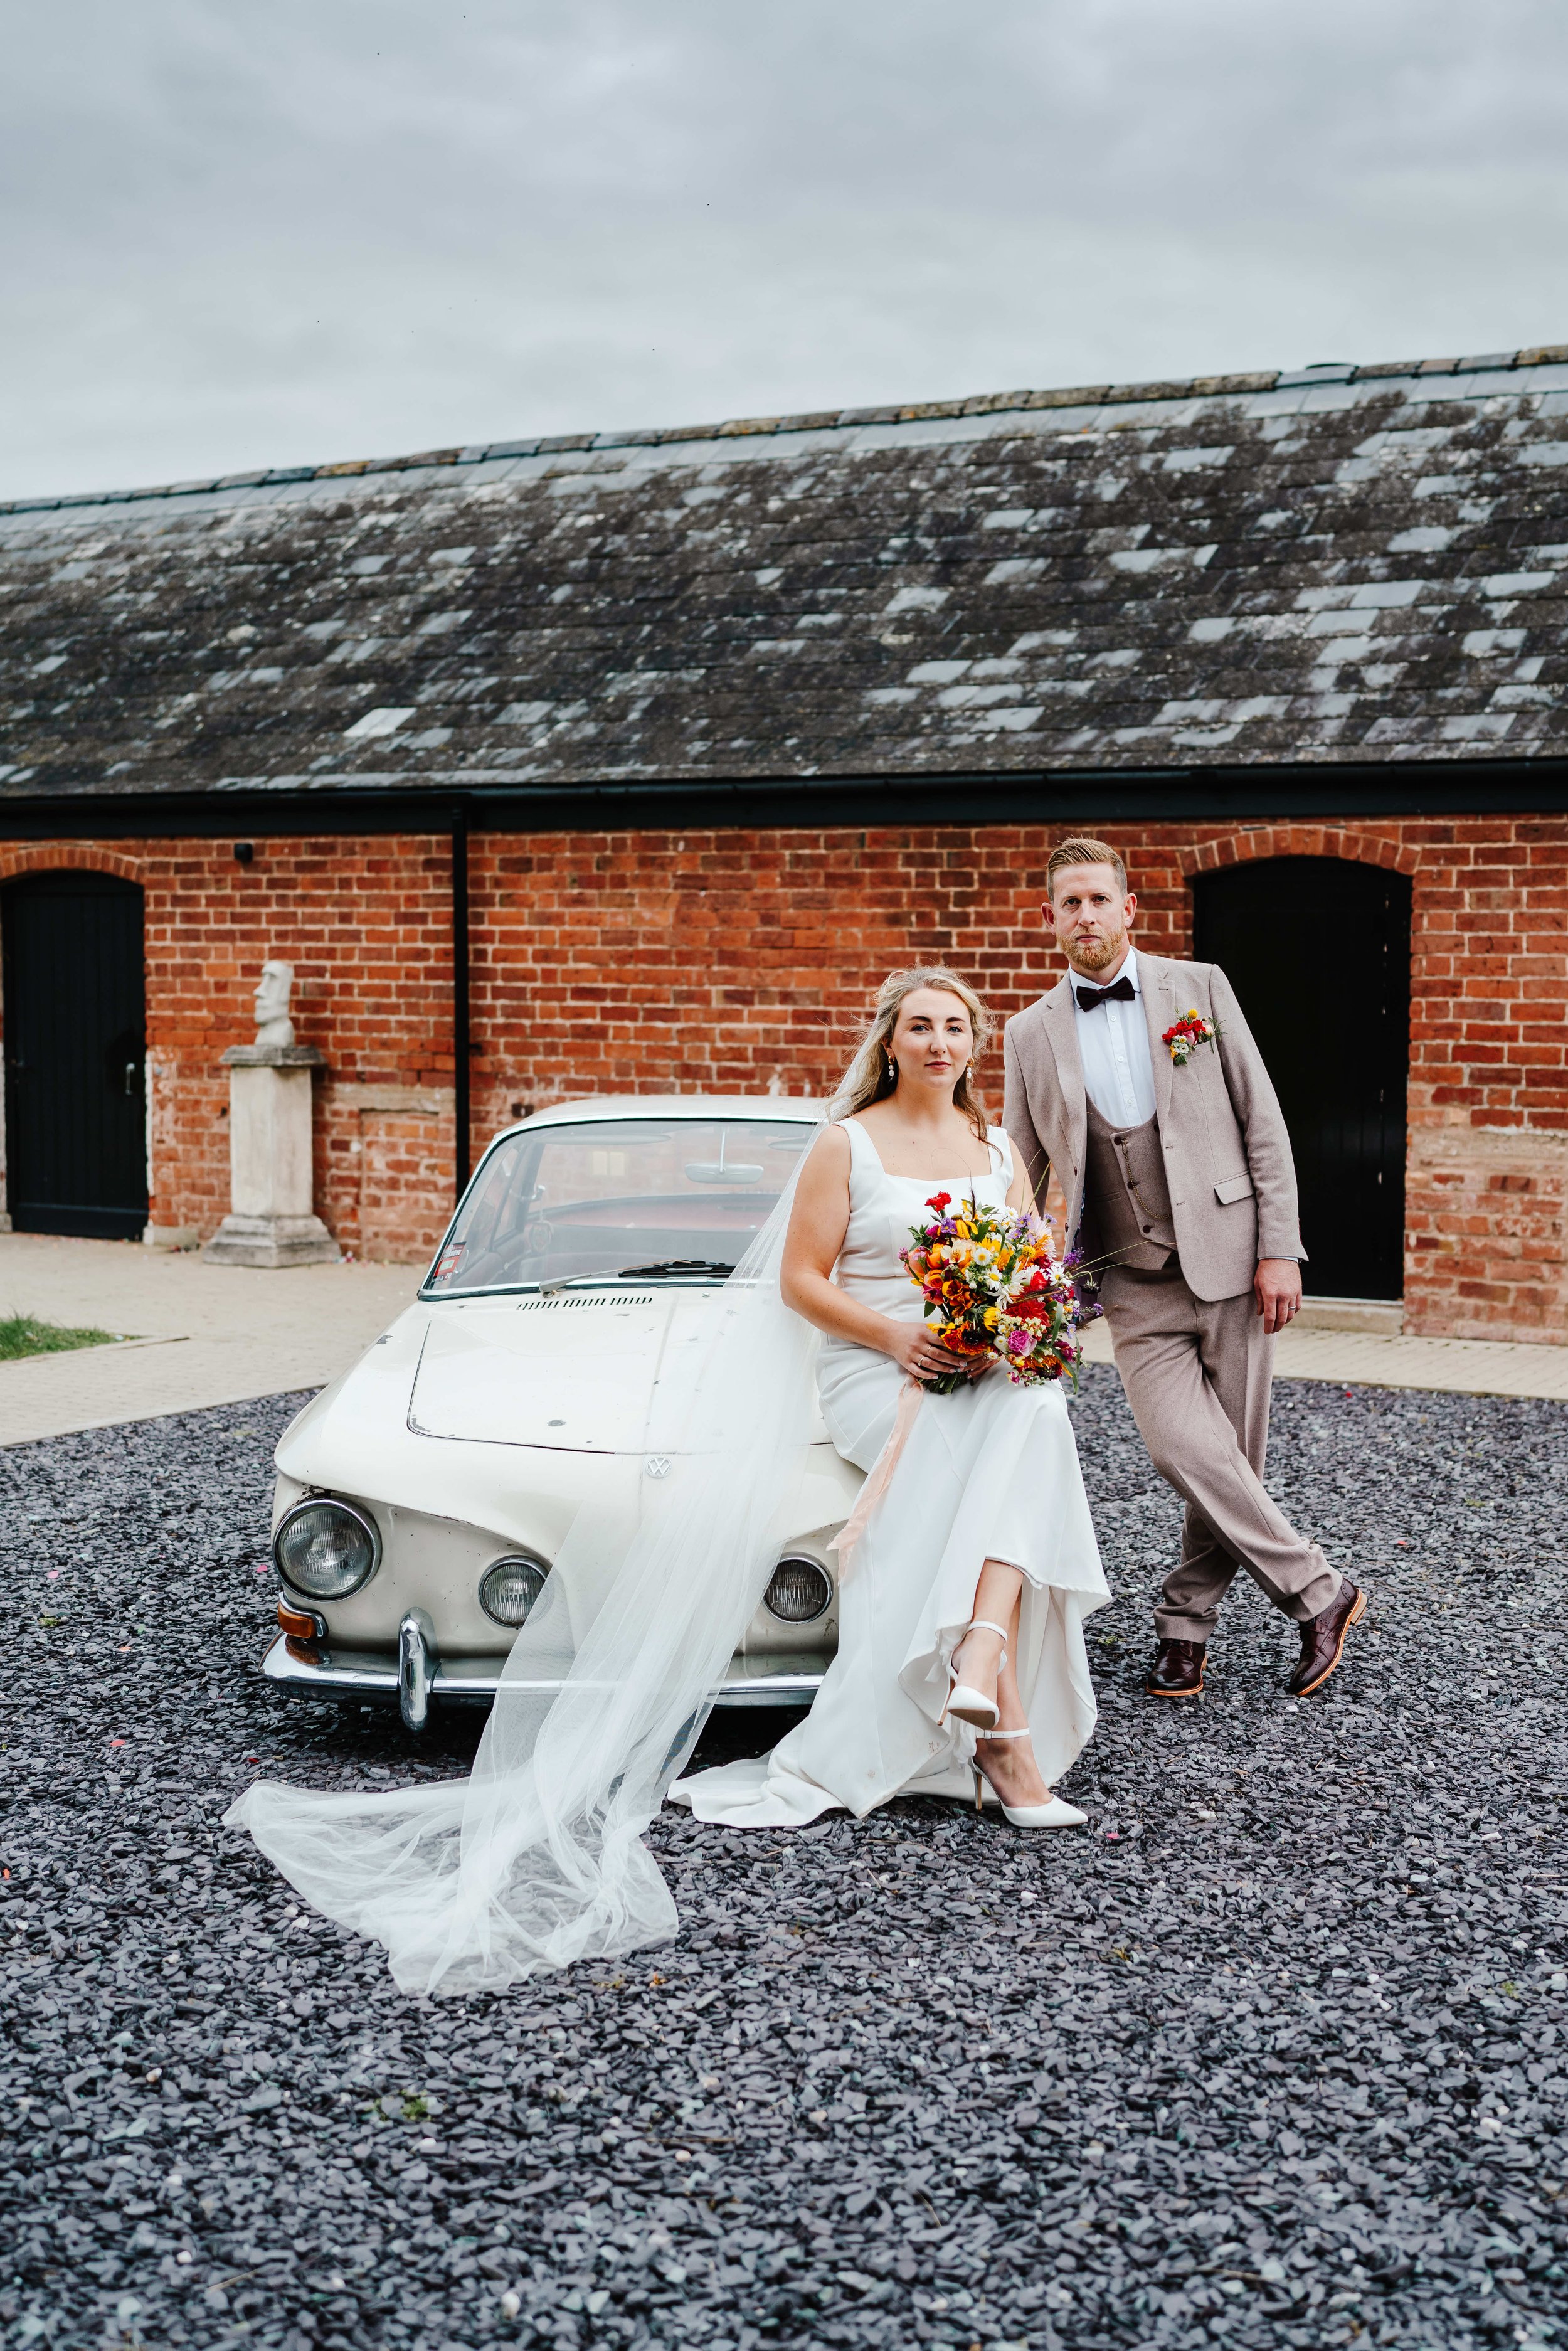 Wedding couple at Crumplebury posing on vintage car